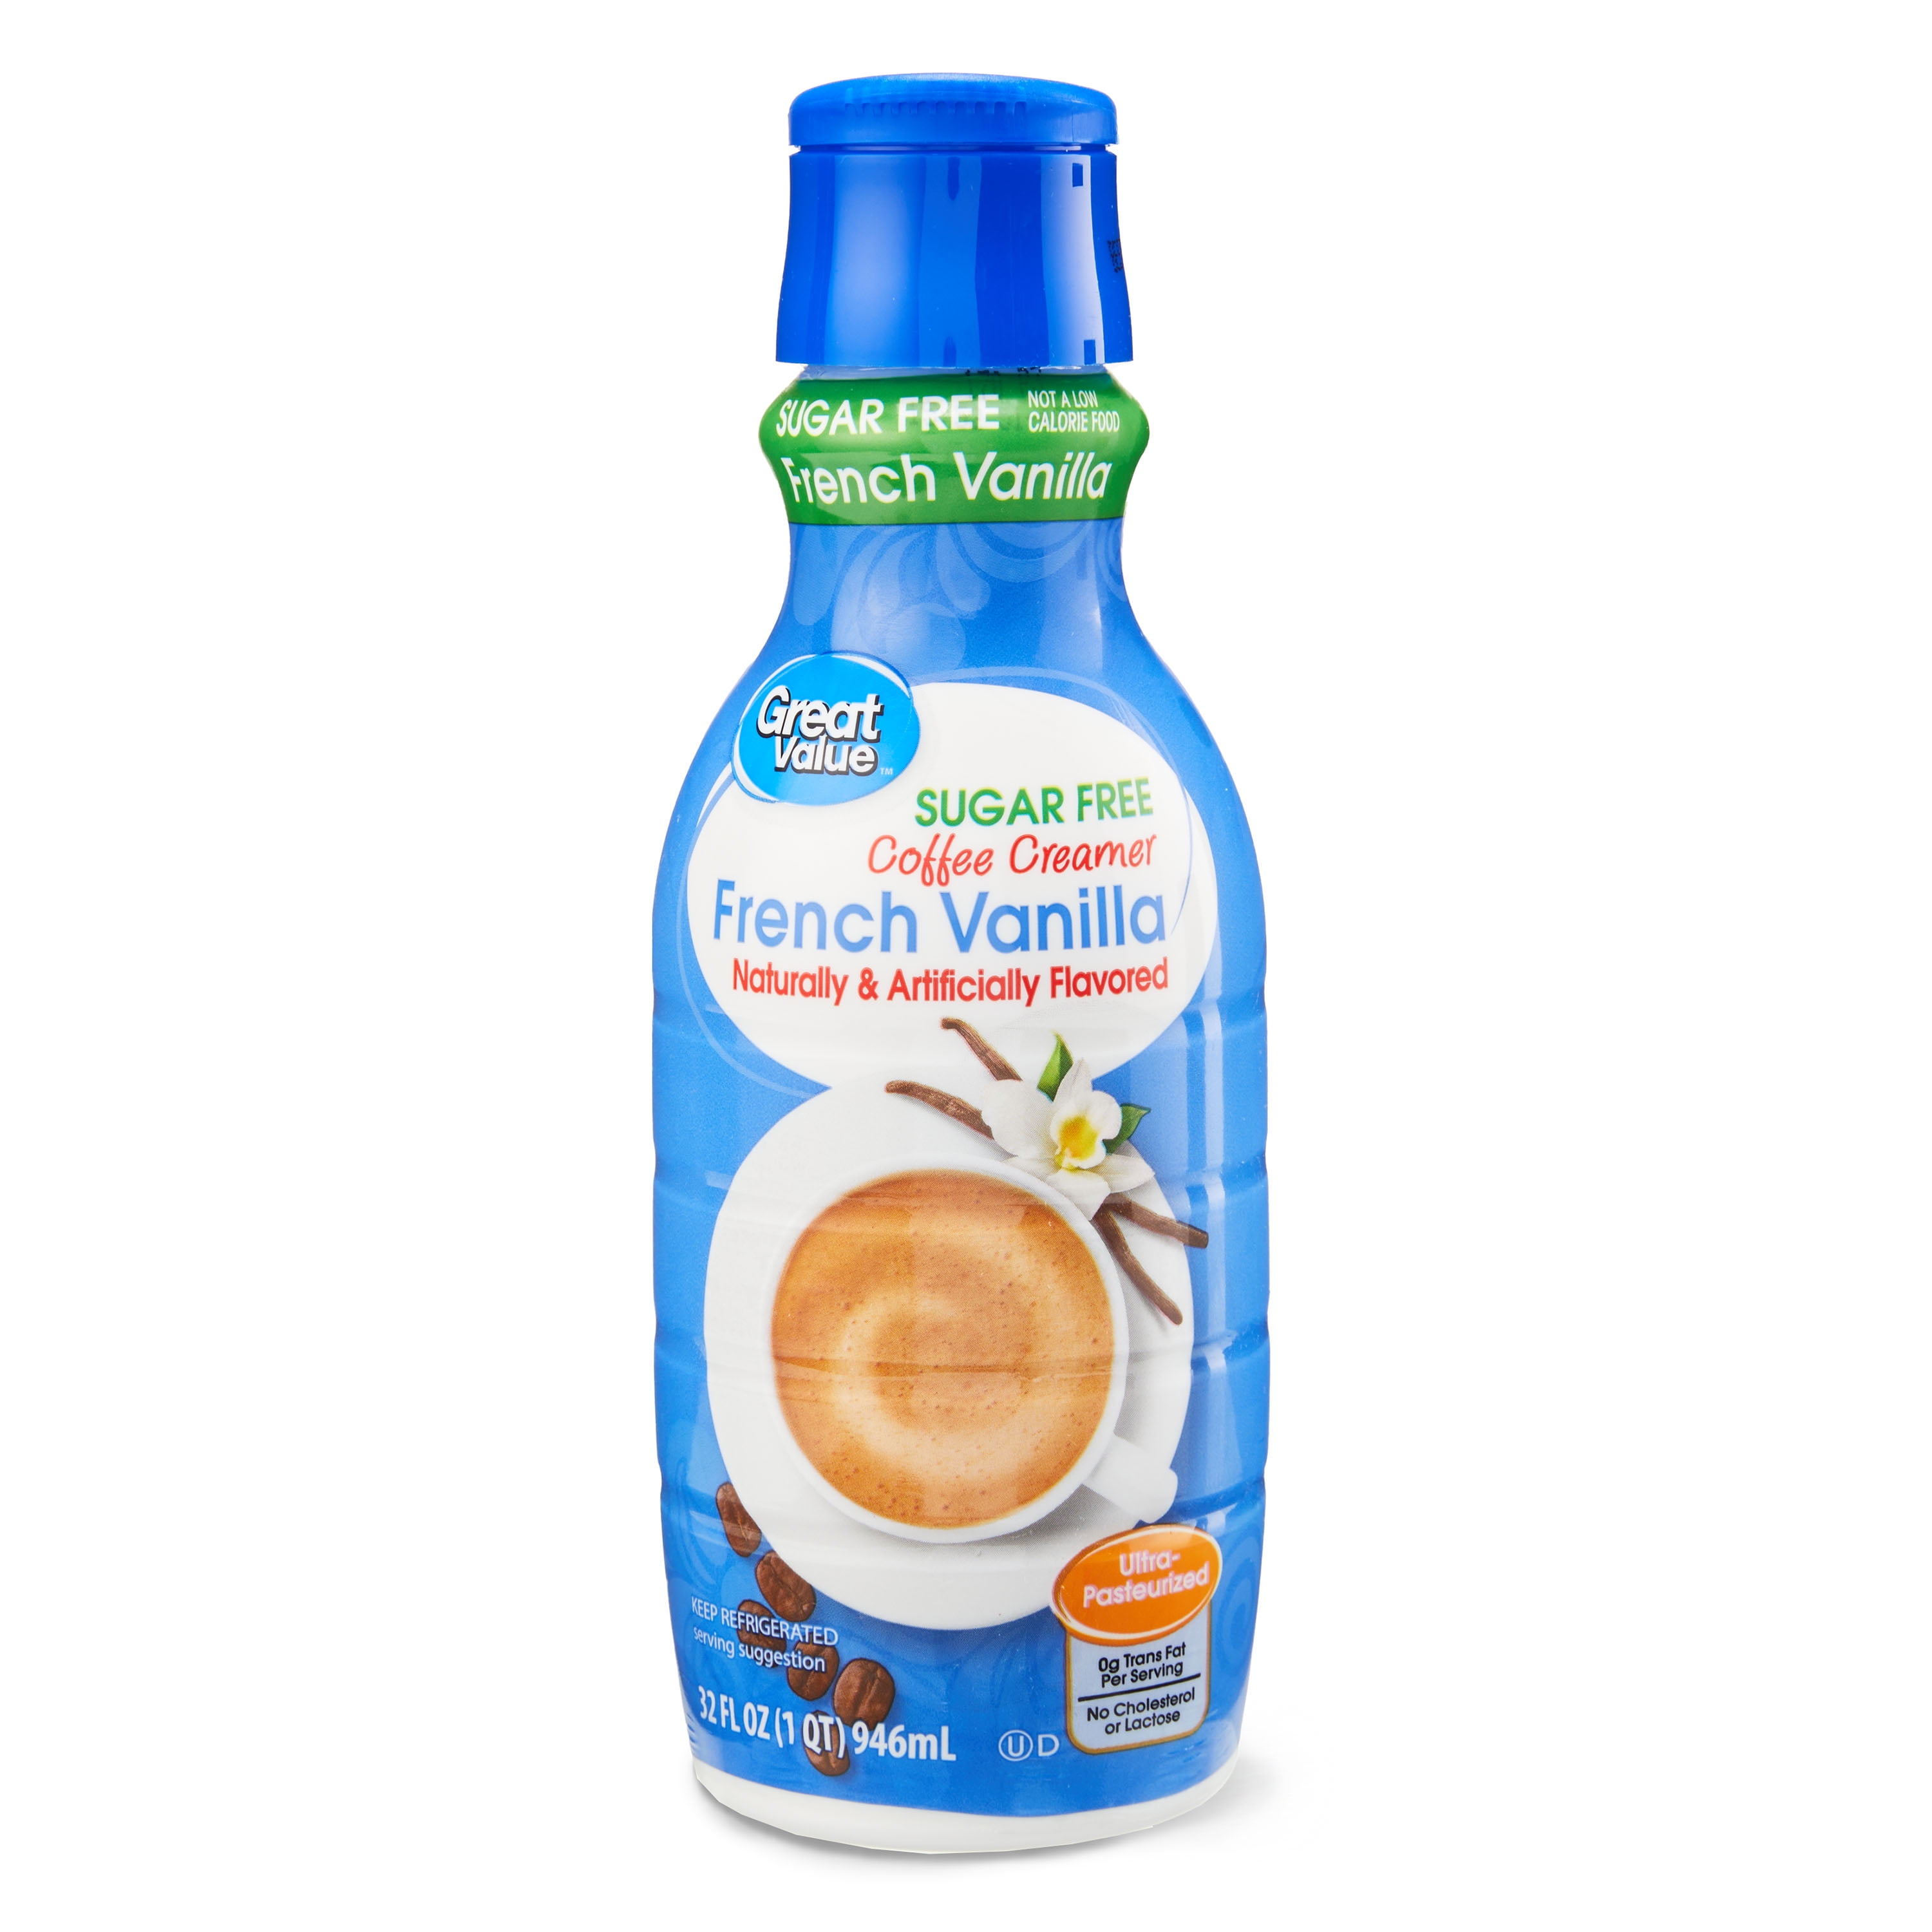 Great Value Sugar Free French Vanilla Coffee Creamer, 32 fl oz